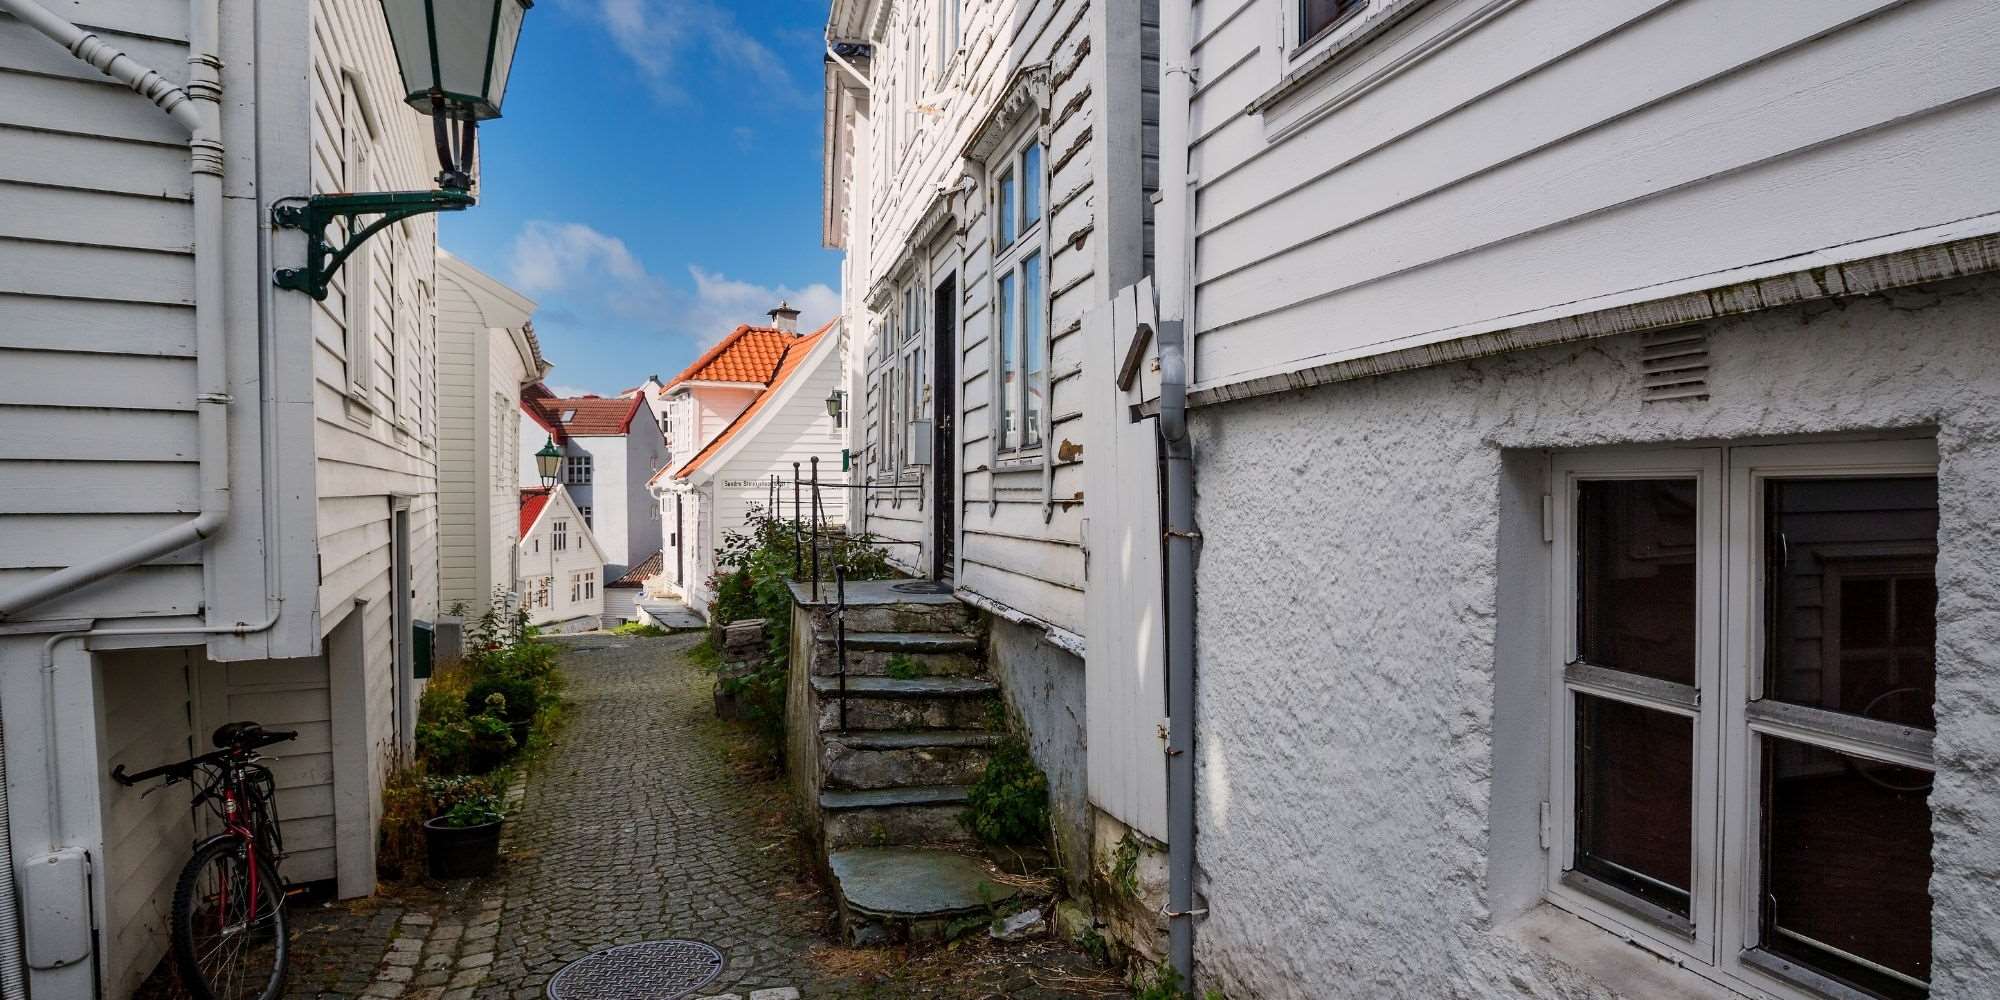 A walk through Bergens past & present - visitBergen.com